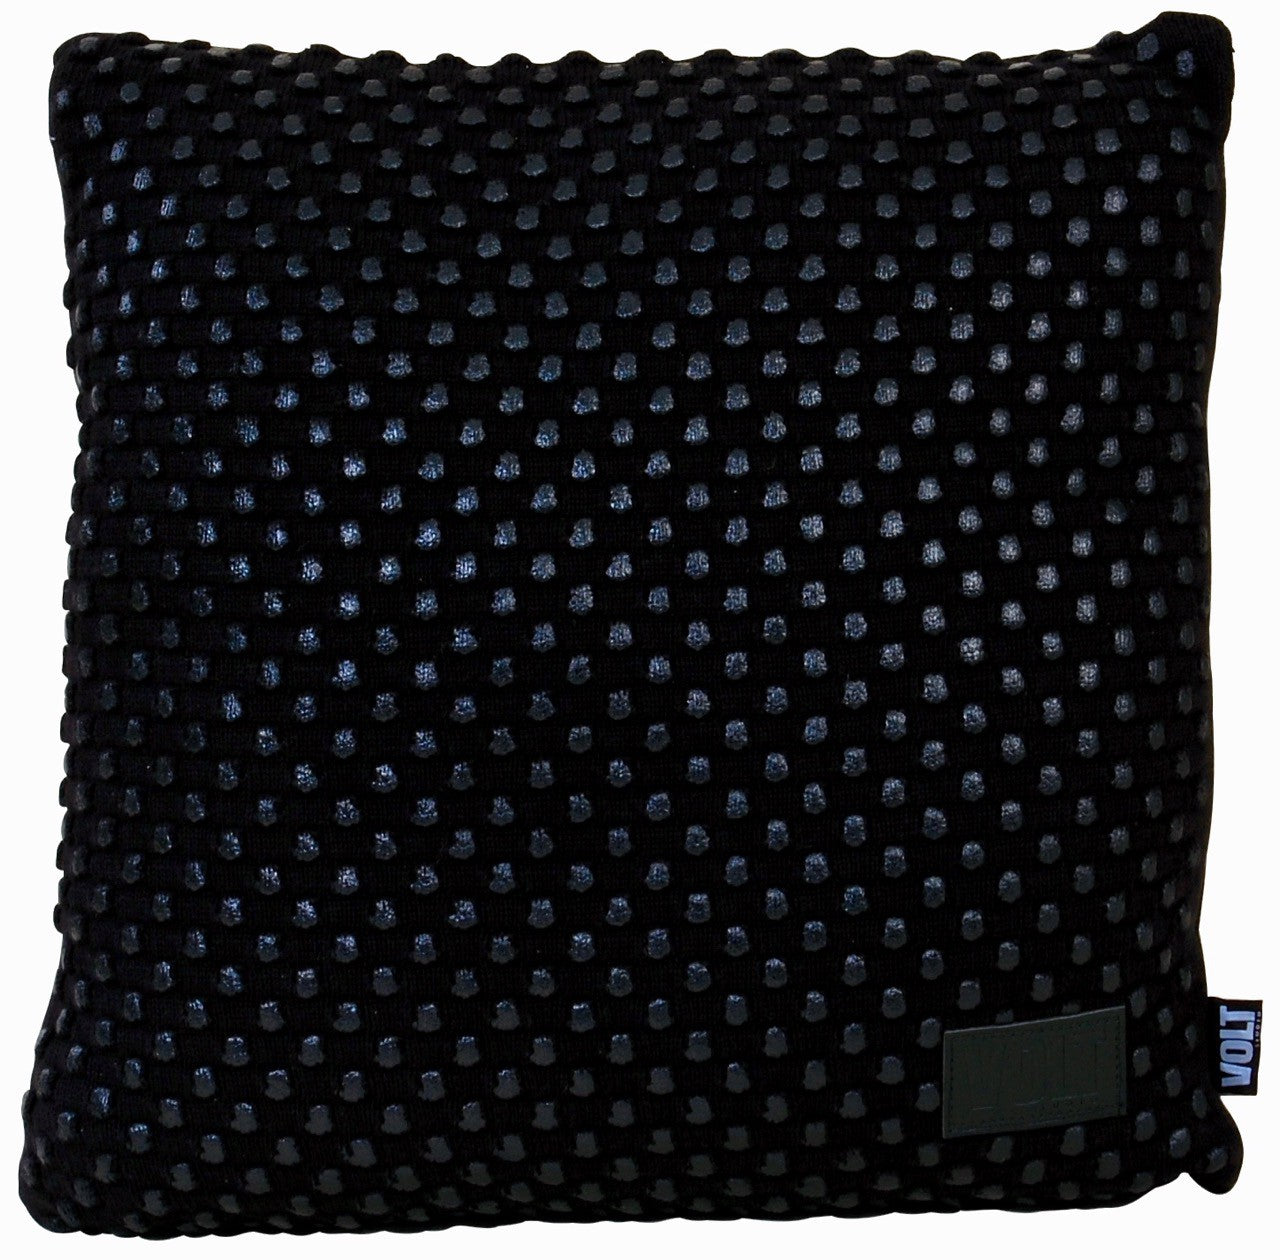 Cushion knitted black foil studs on black 45x45cm